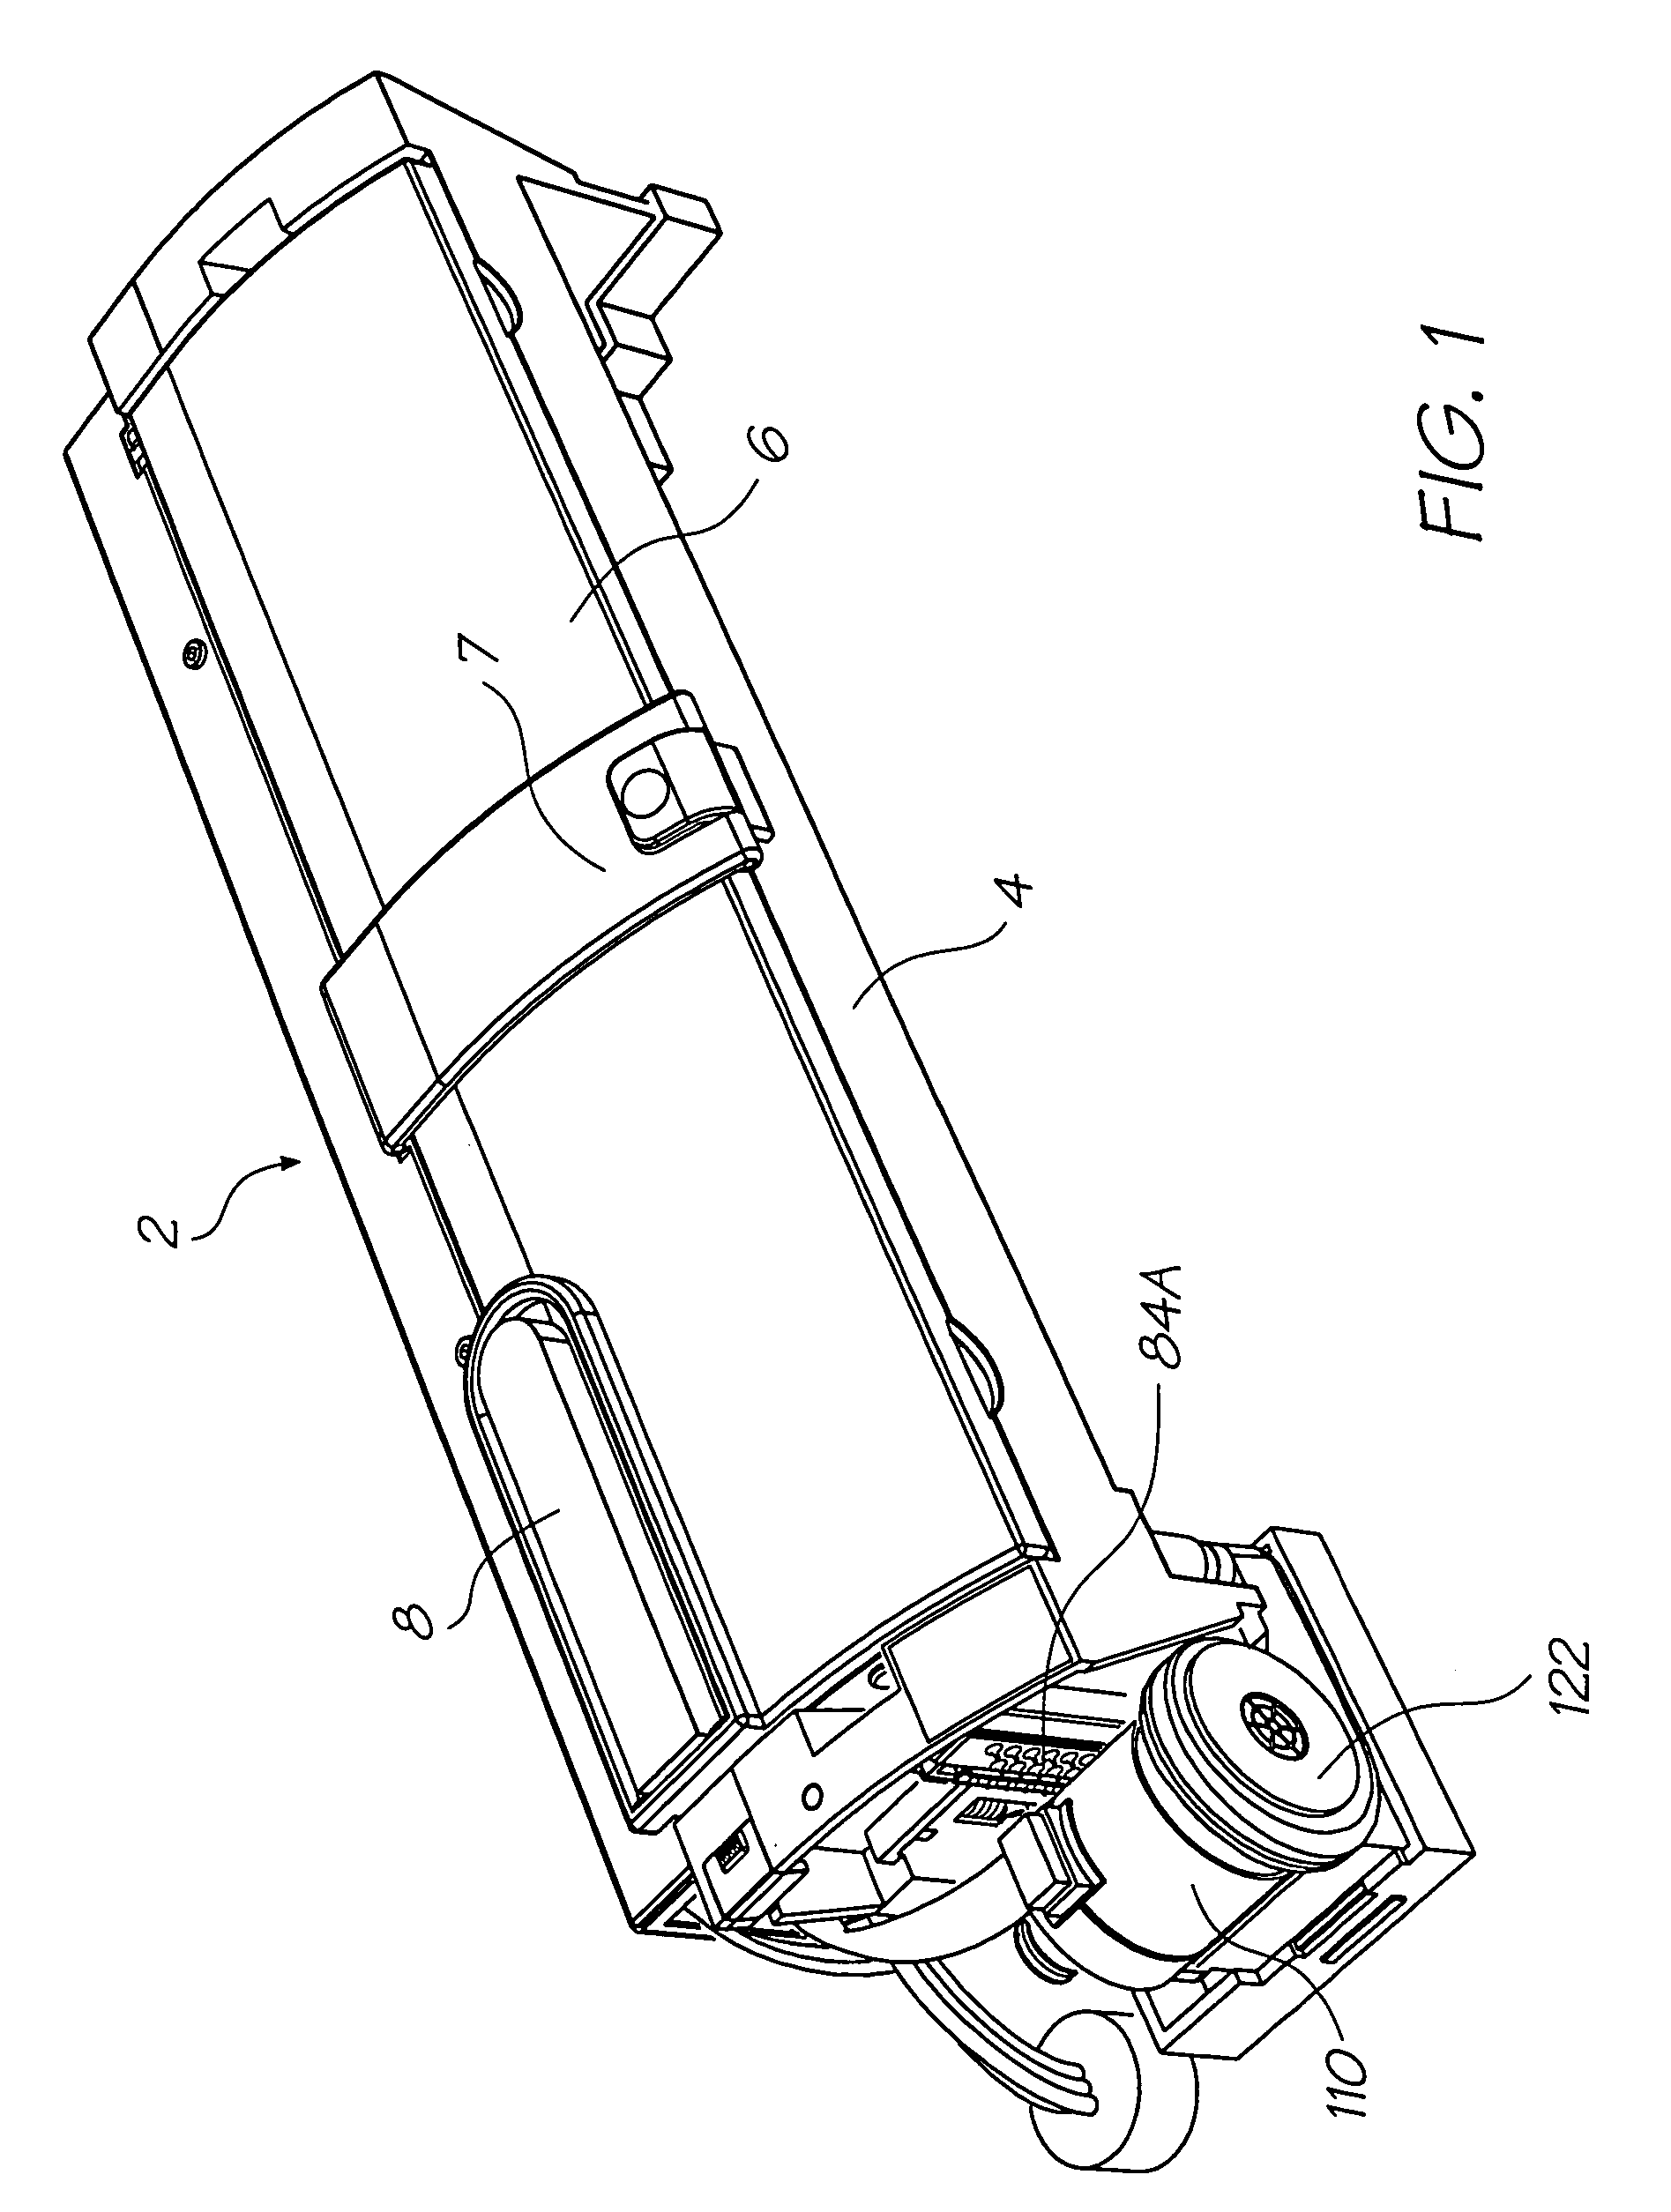 Inkjet printer cartridge with integral shield